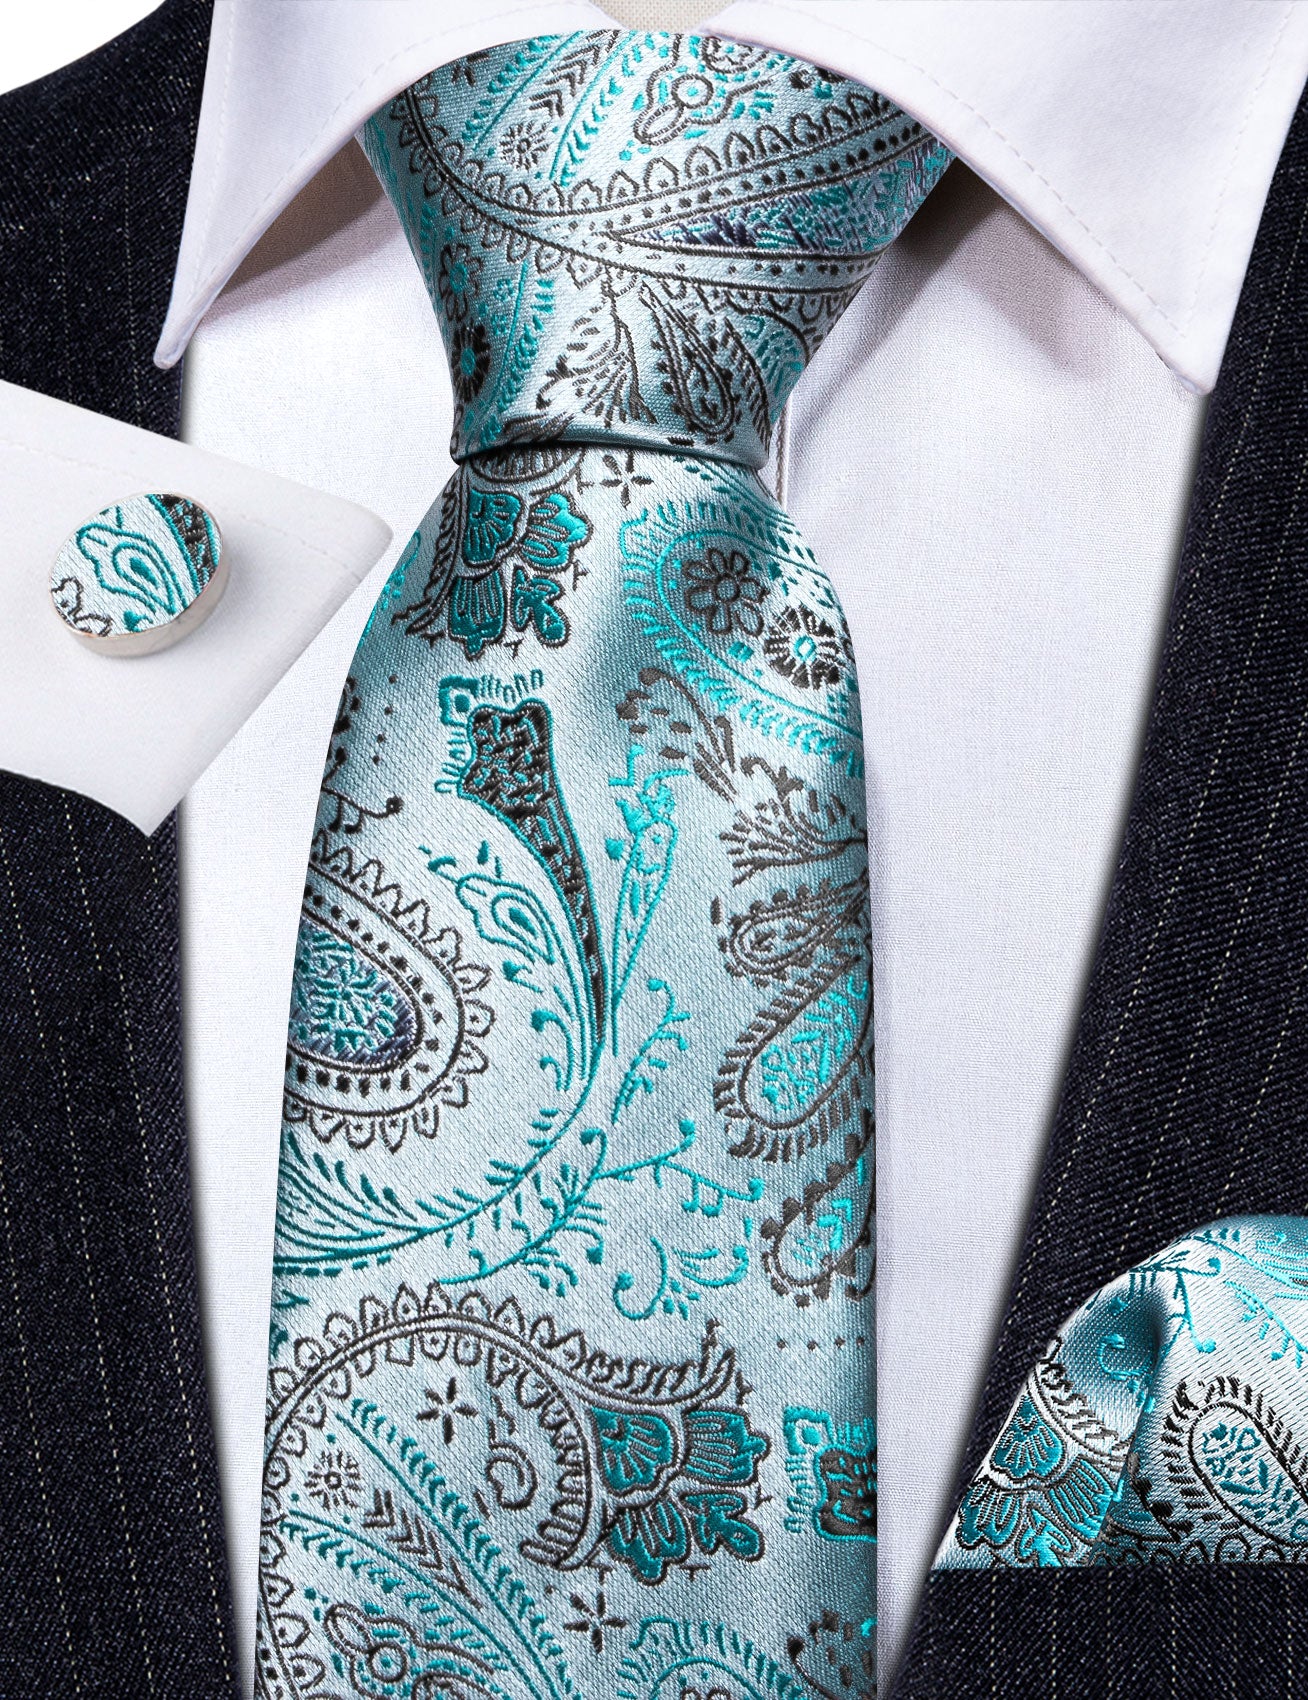 Teal Paisley Silk Tie Handkerchief Cufflinks Set